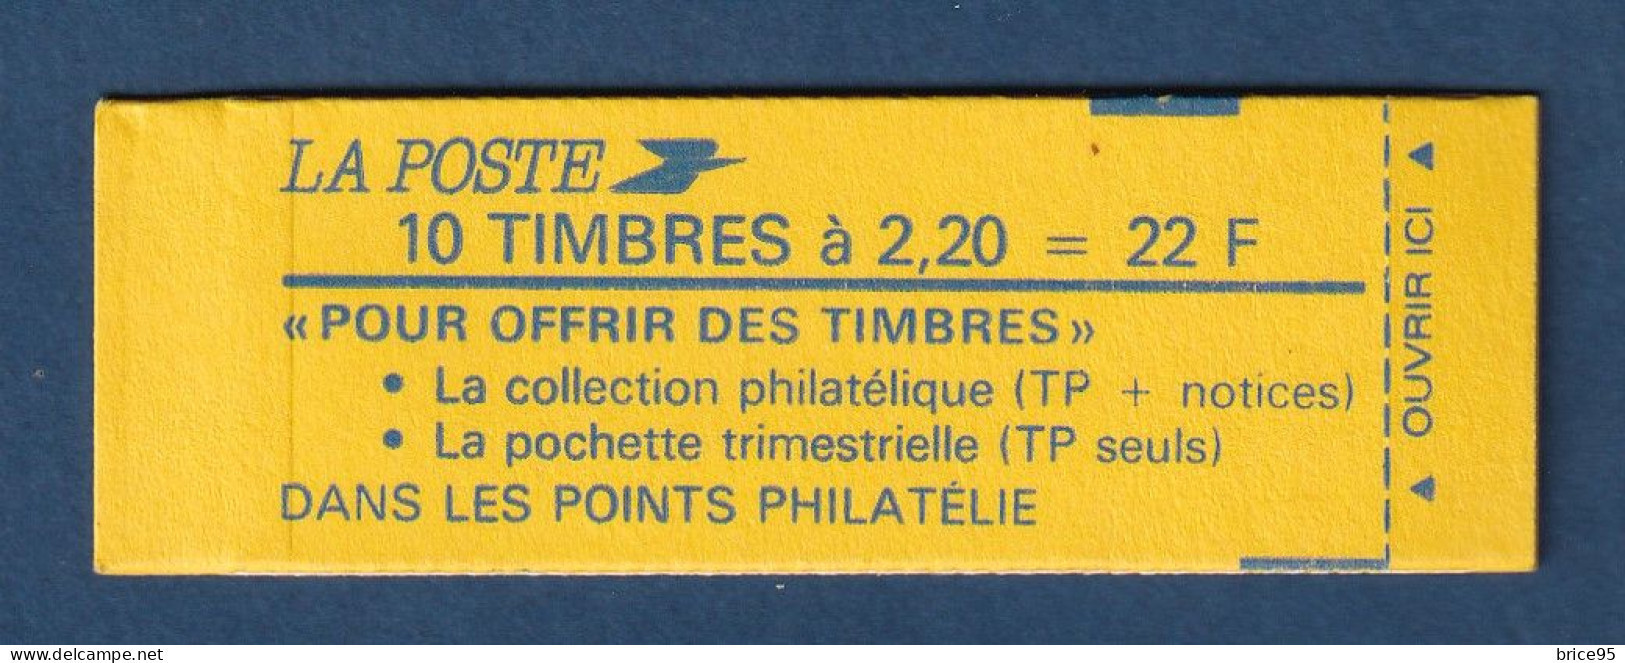 France - Carnet - YT N° 2376 C4 ** - Neuf Sans Charnière - 1985 - Modernes : 1959-...